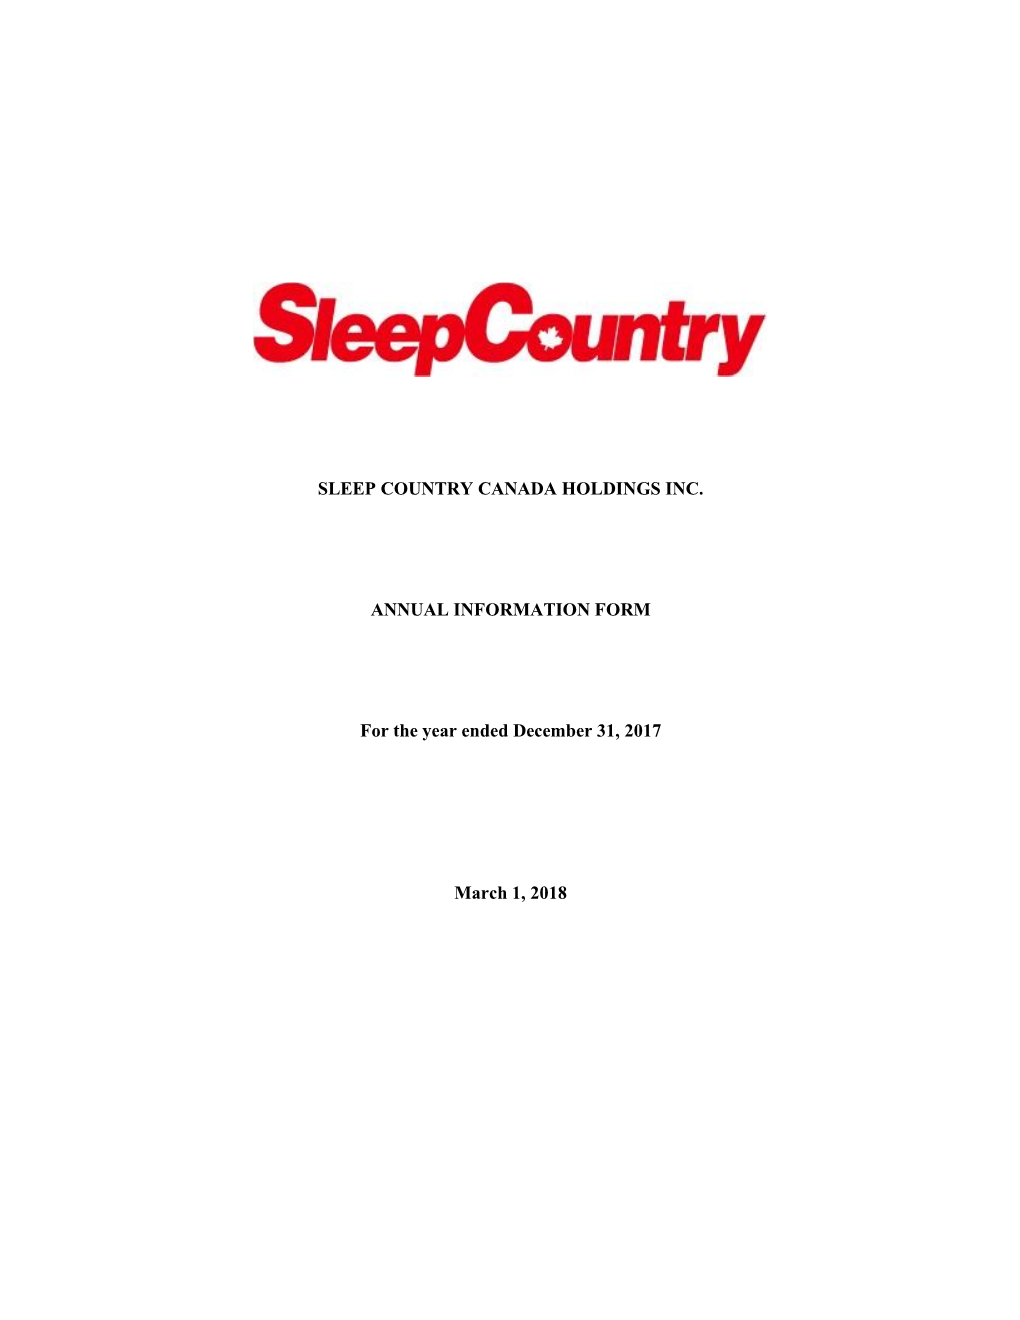 Sleep Country Canada Holdings Inc. Annual